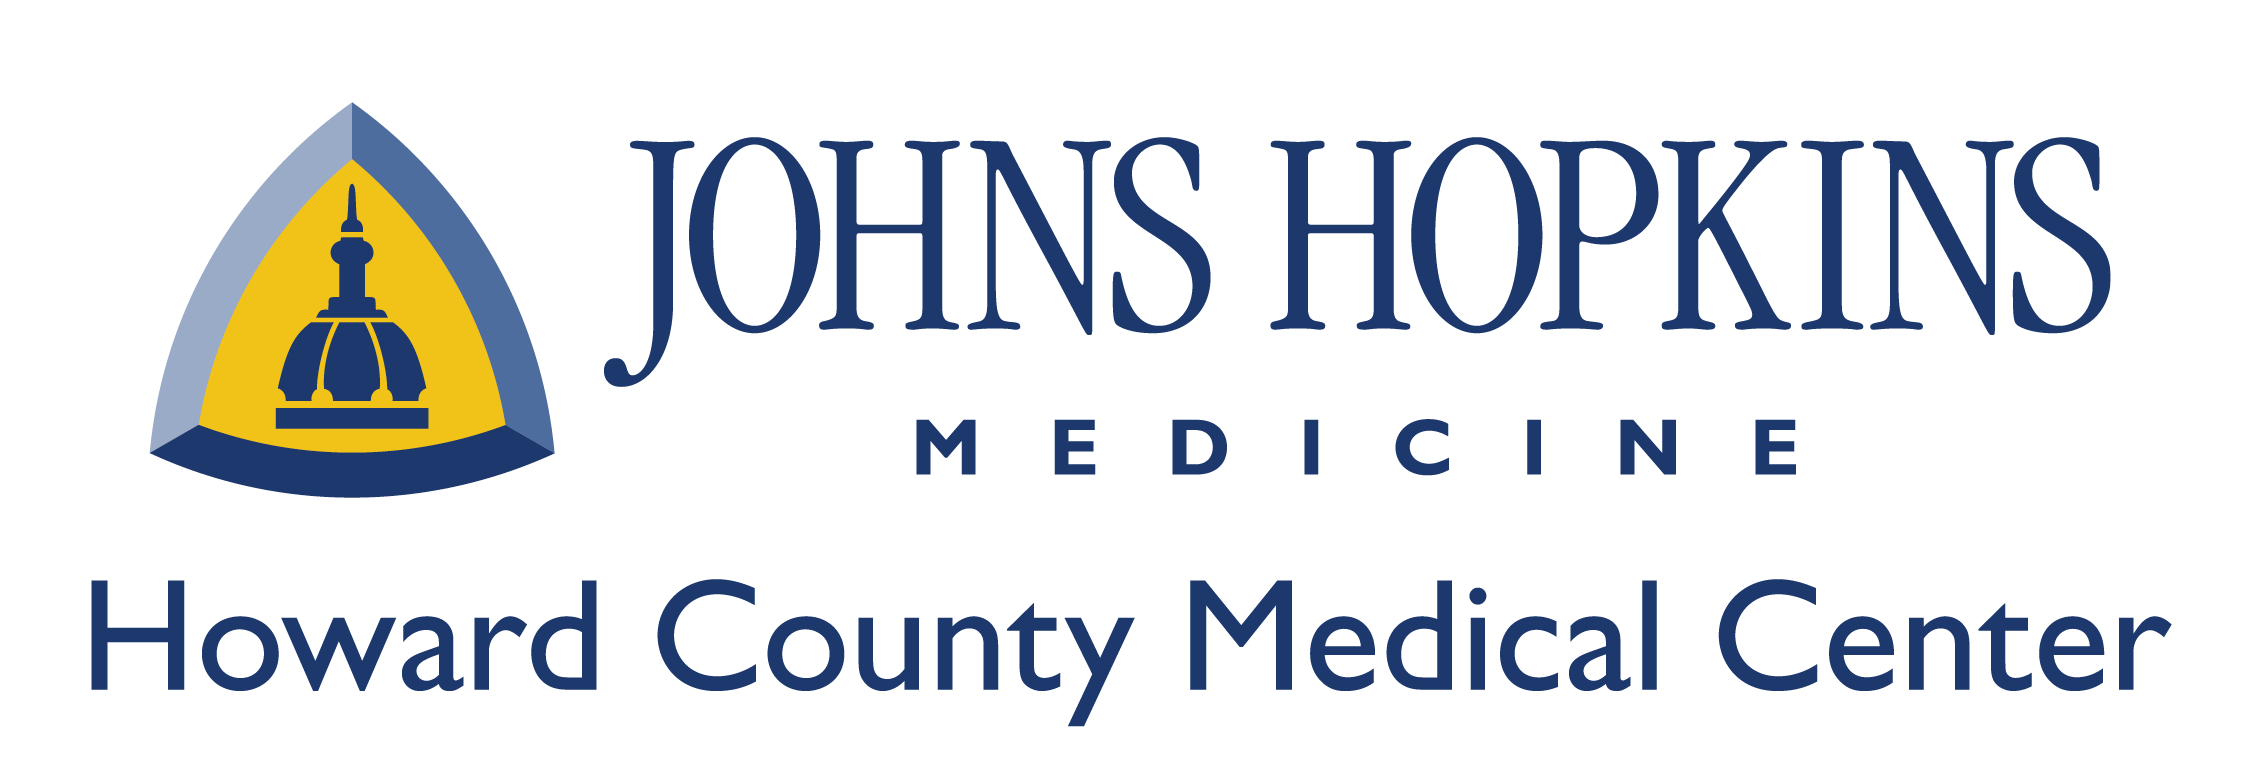 Johns Hopkins Medicine - Howard County Medical Center